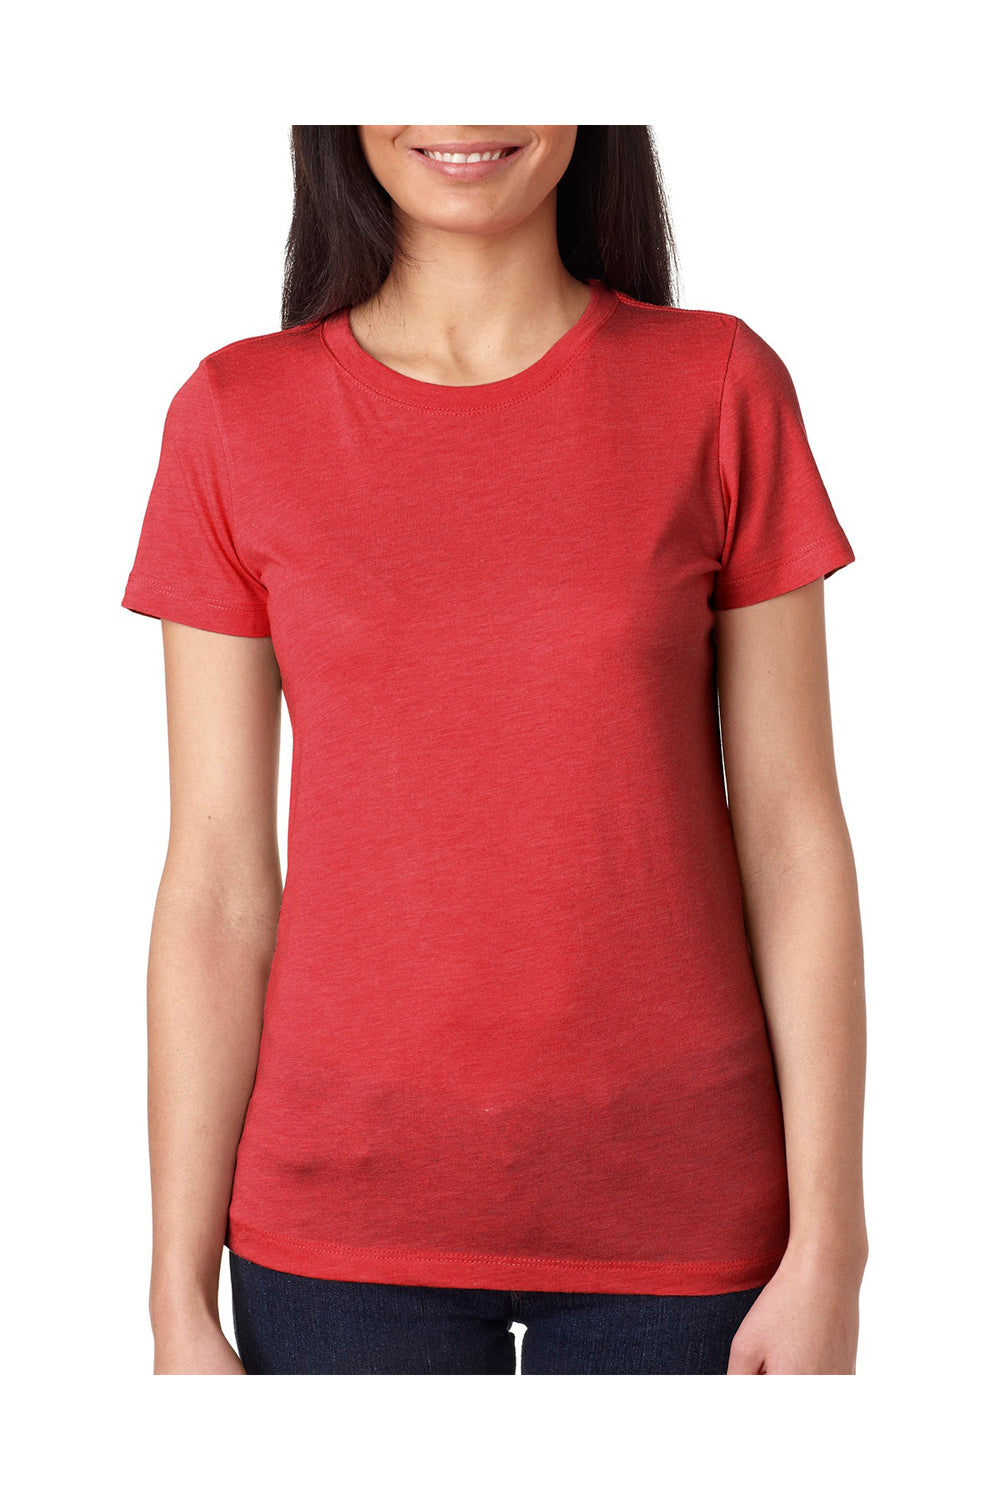 Next Level 6710 Womens Jersey Short Sleeve Crewneck T-Shirt Red Front